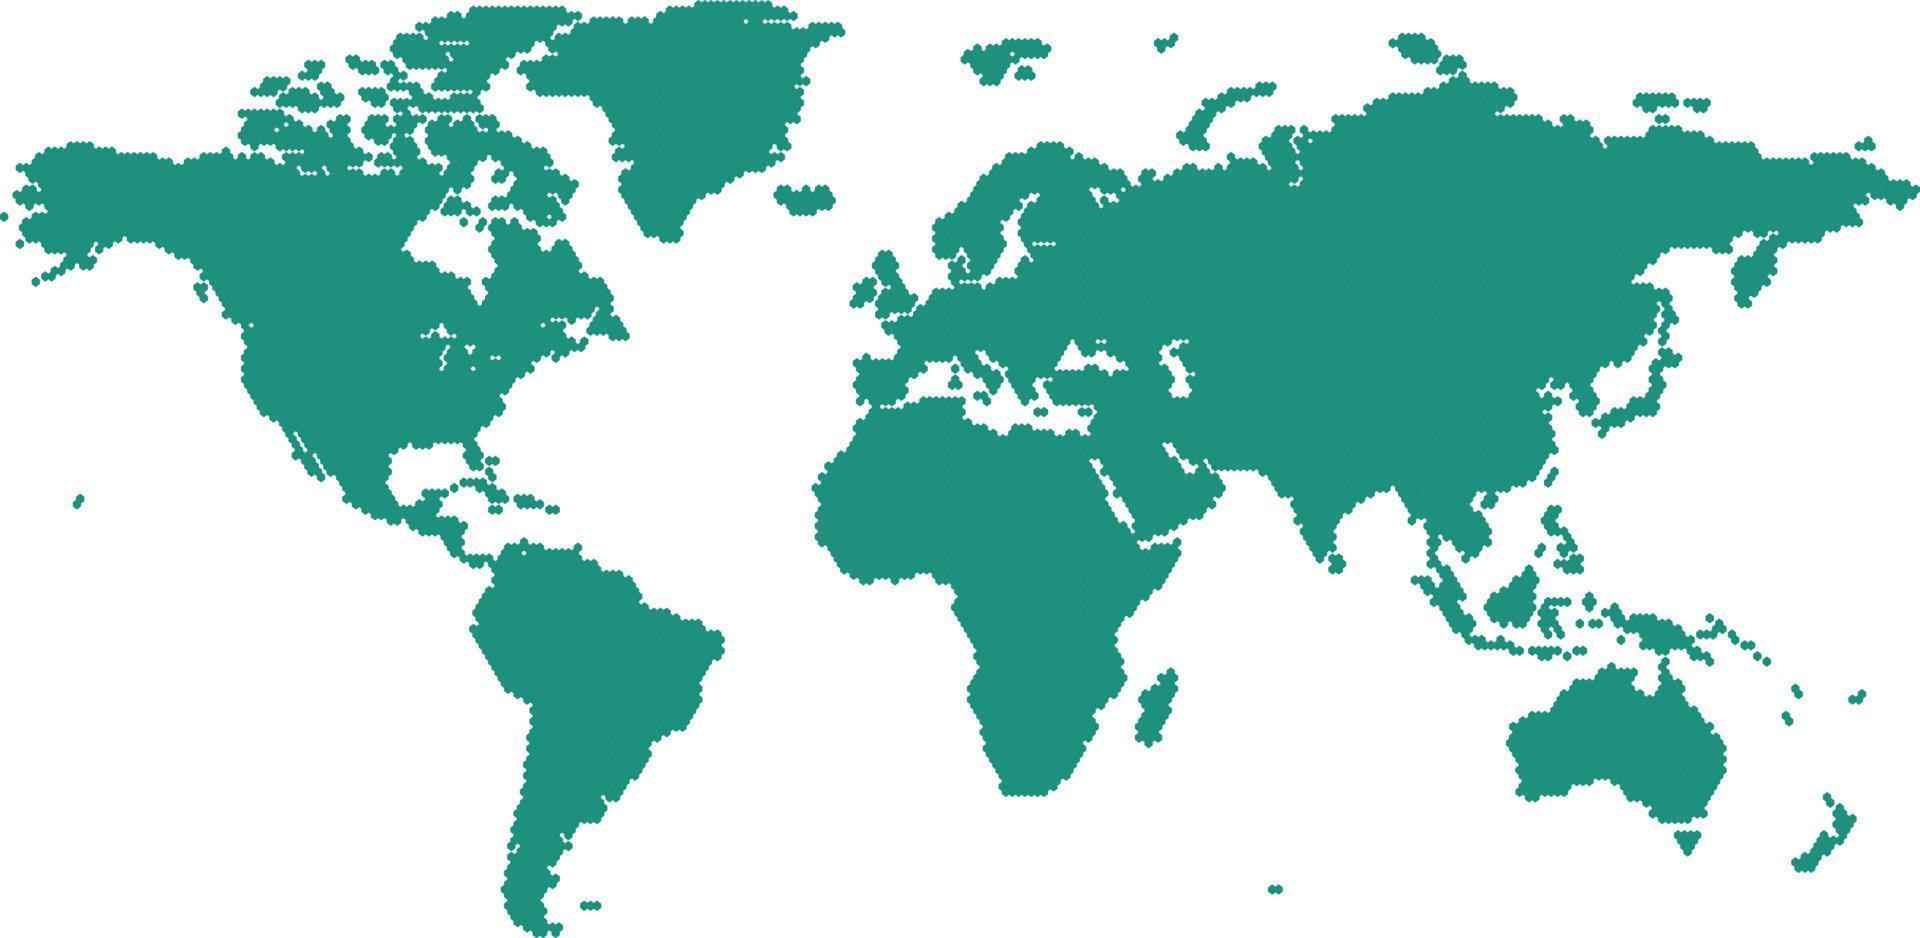 Weltkarte blaue grüne Farbe vektor